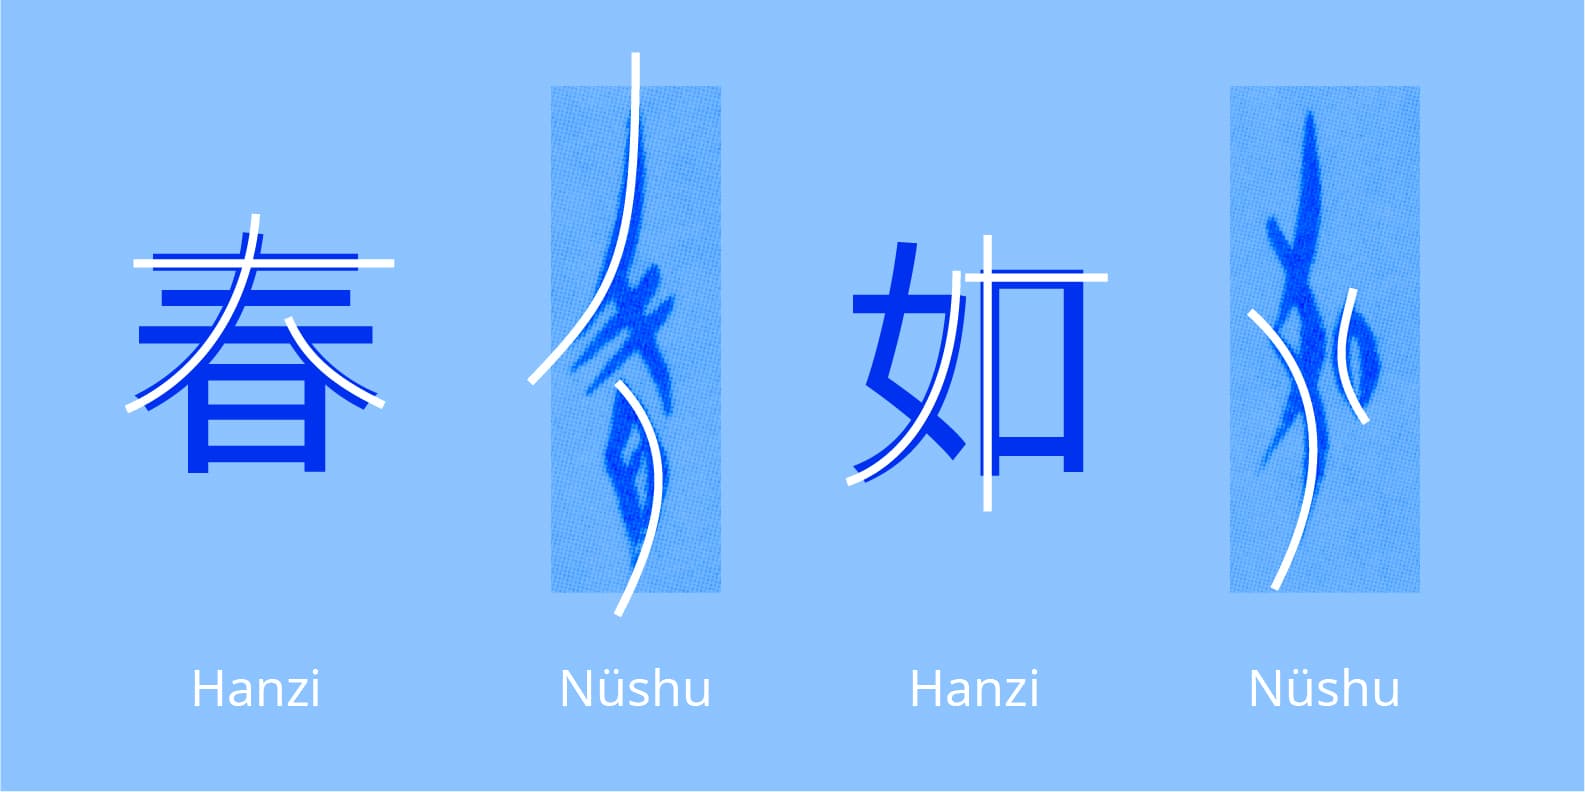 Hanzi and Nüshu stroke directions comparison in blue shades